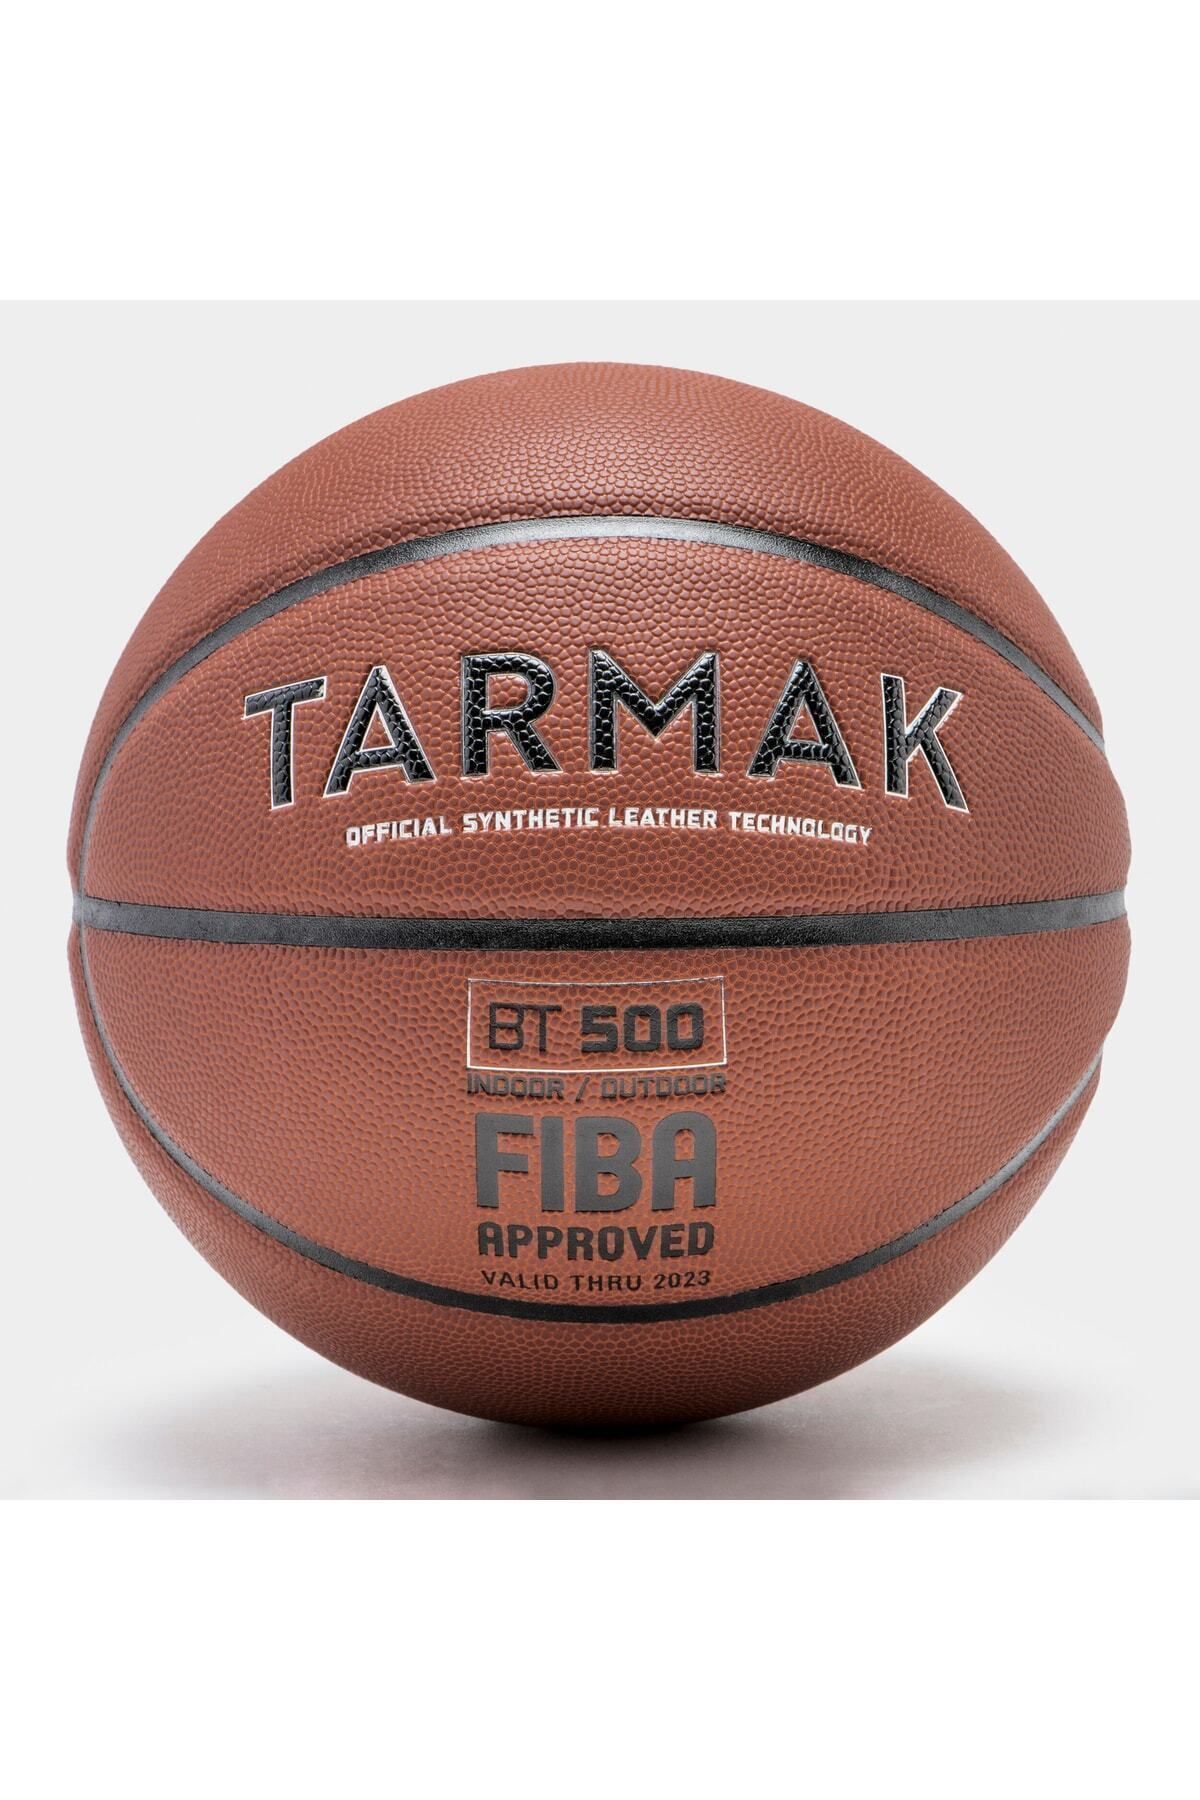 Decathlon Tarmak Basketbol Topu - 6 Numara - Turuncu - Bt500 Touch